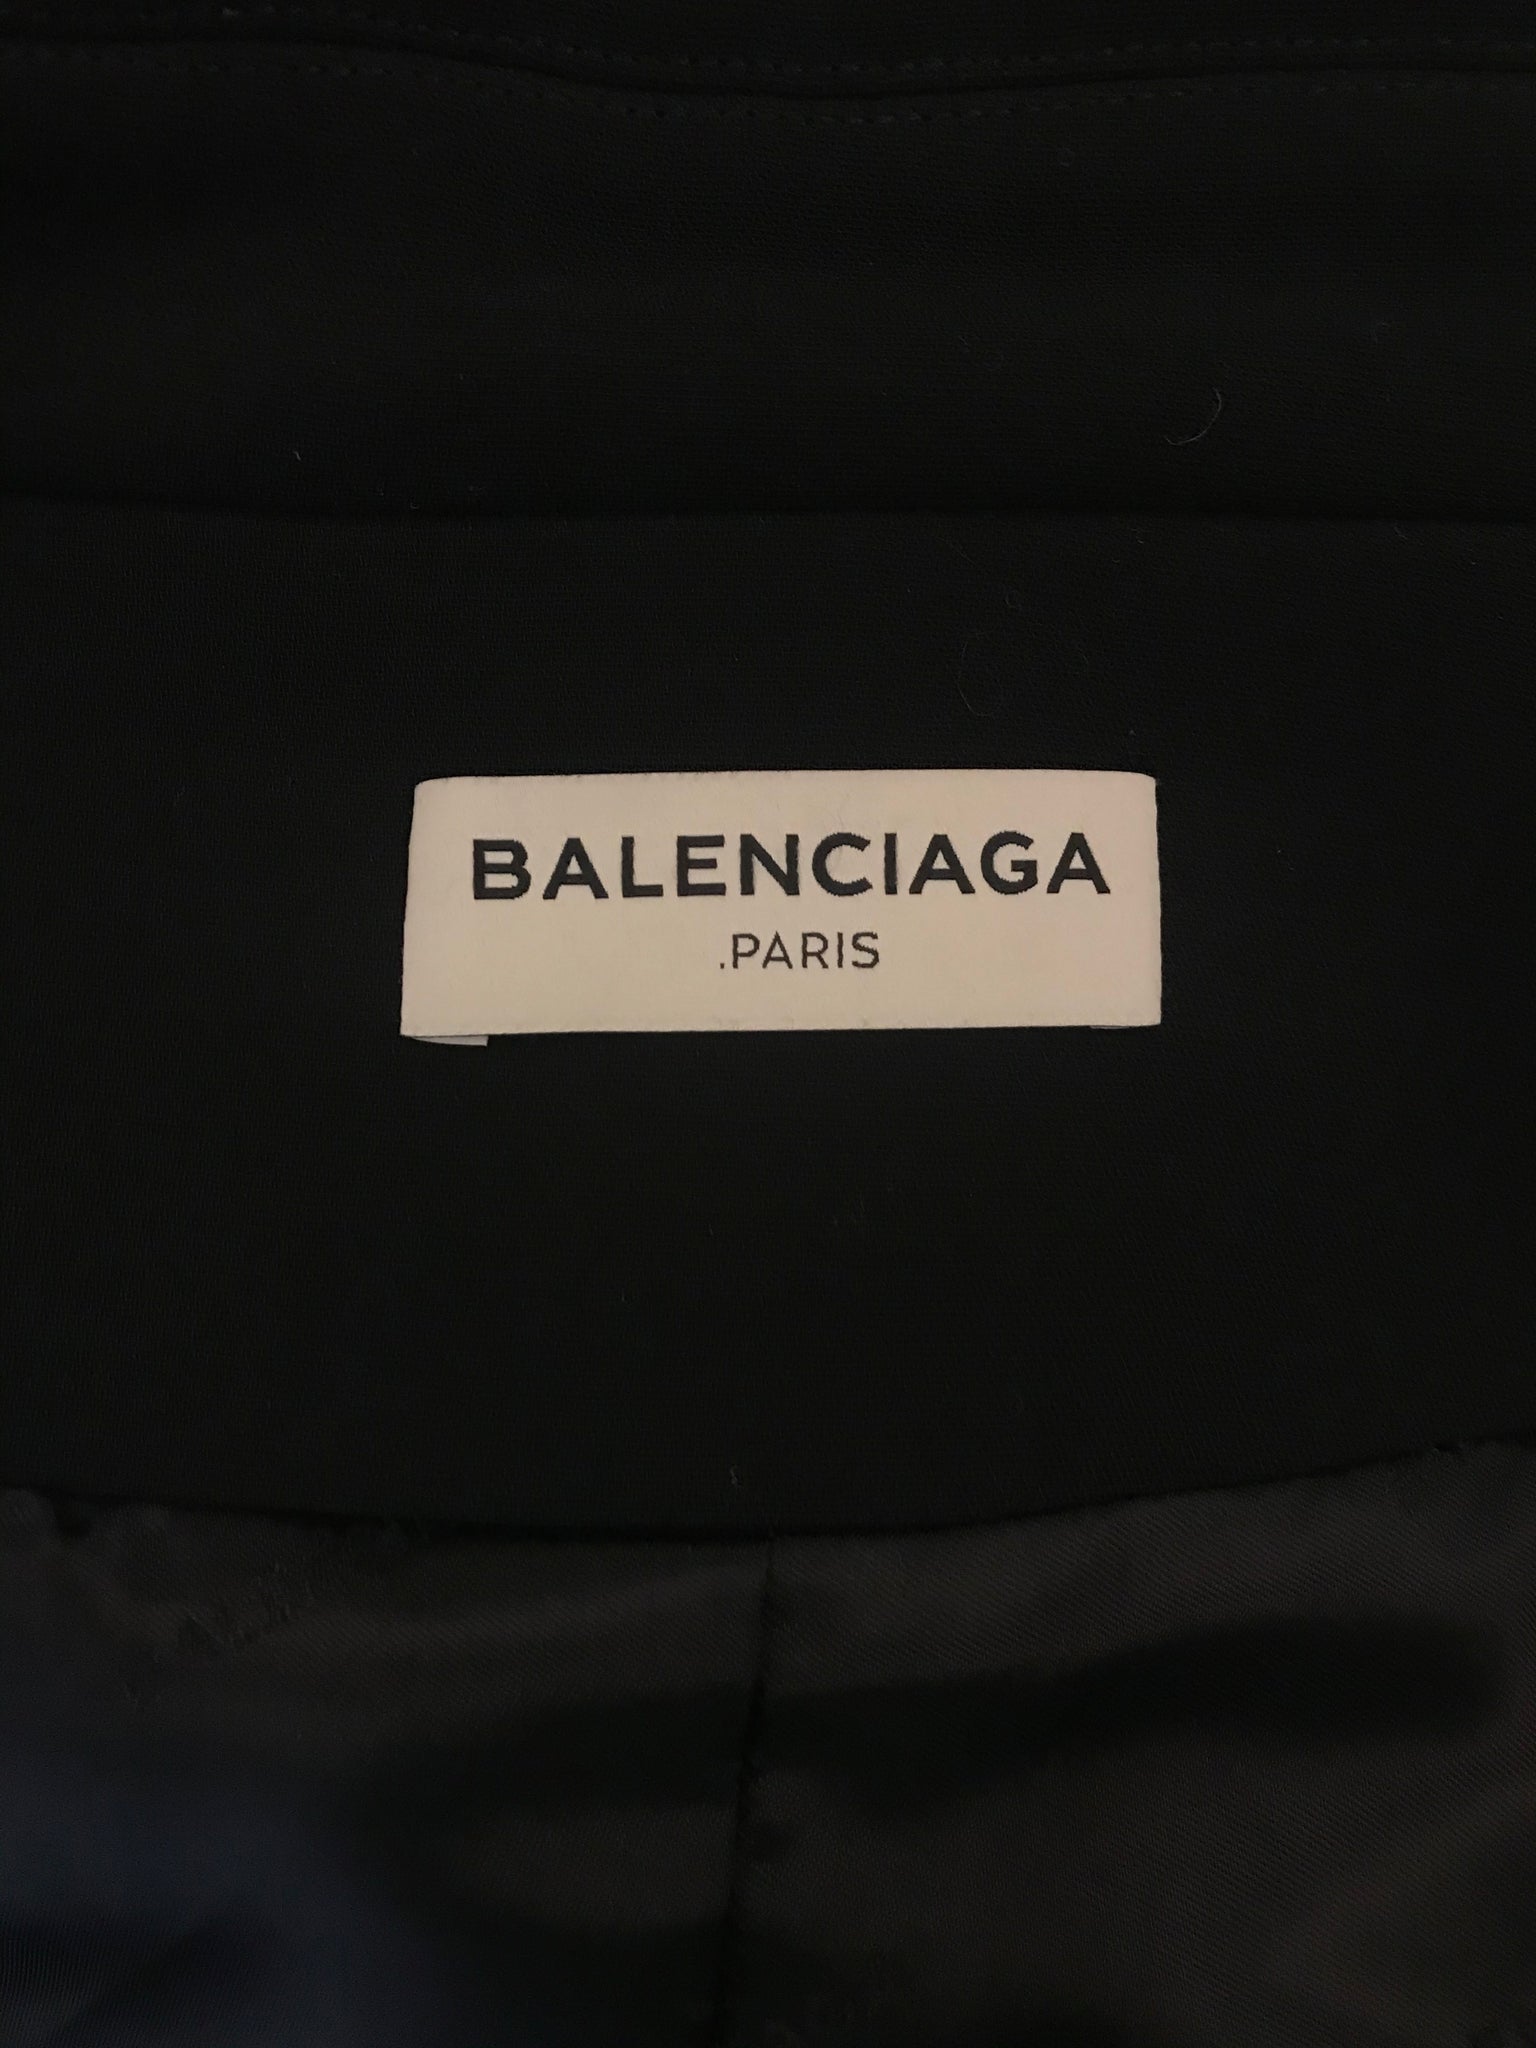 Isabella's Wardrobe Balenciaga Opera Coat.